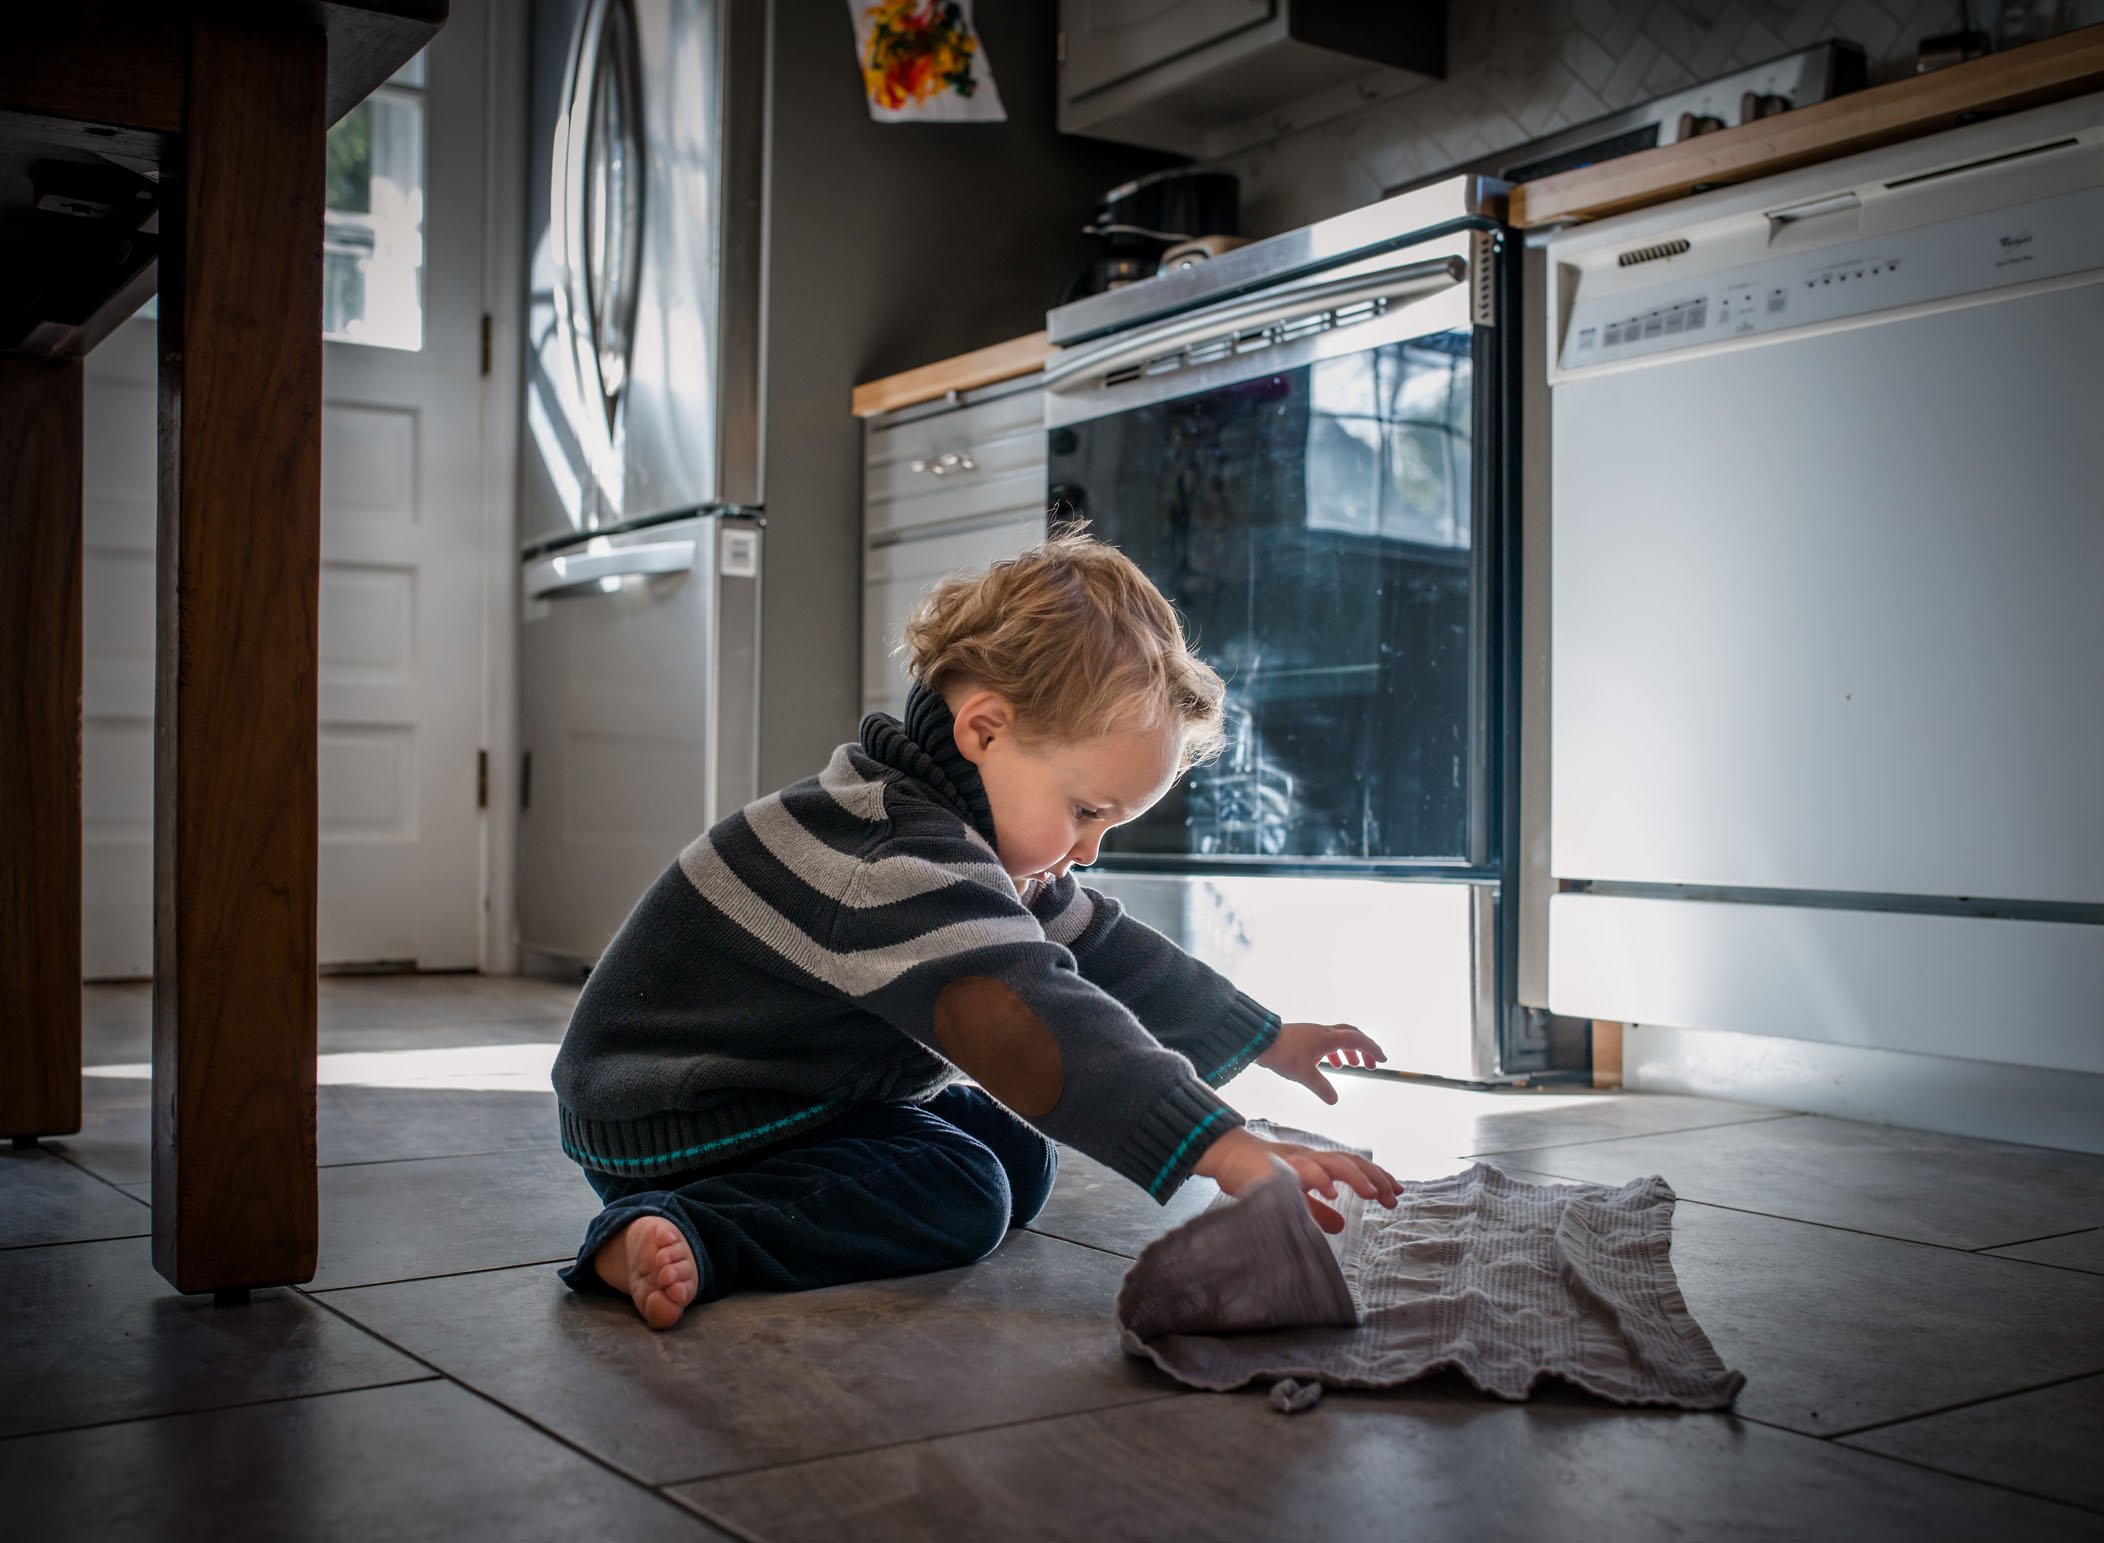 4 year old boy folding a towel on kitchen floor